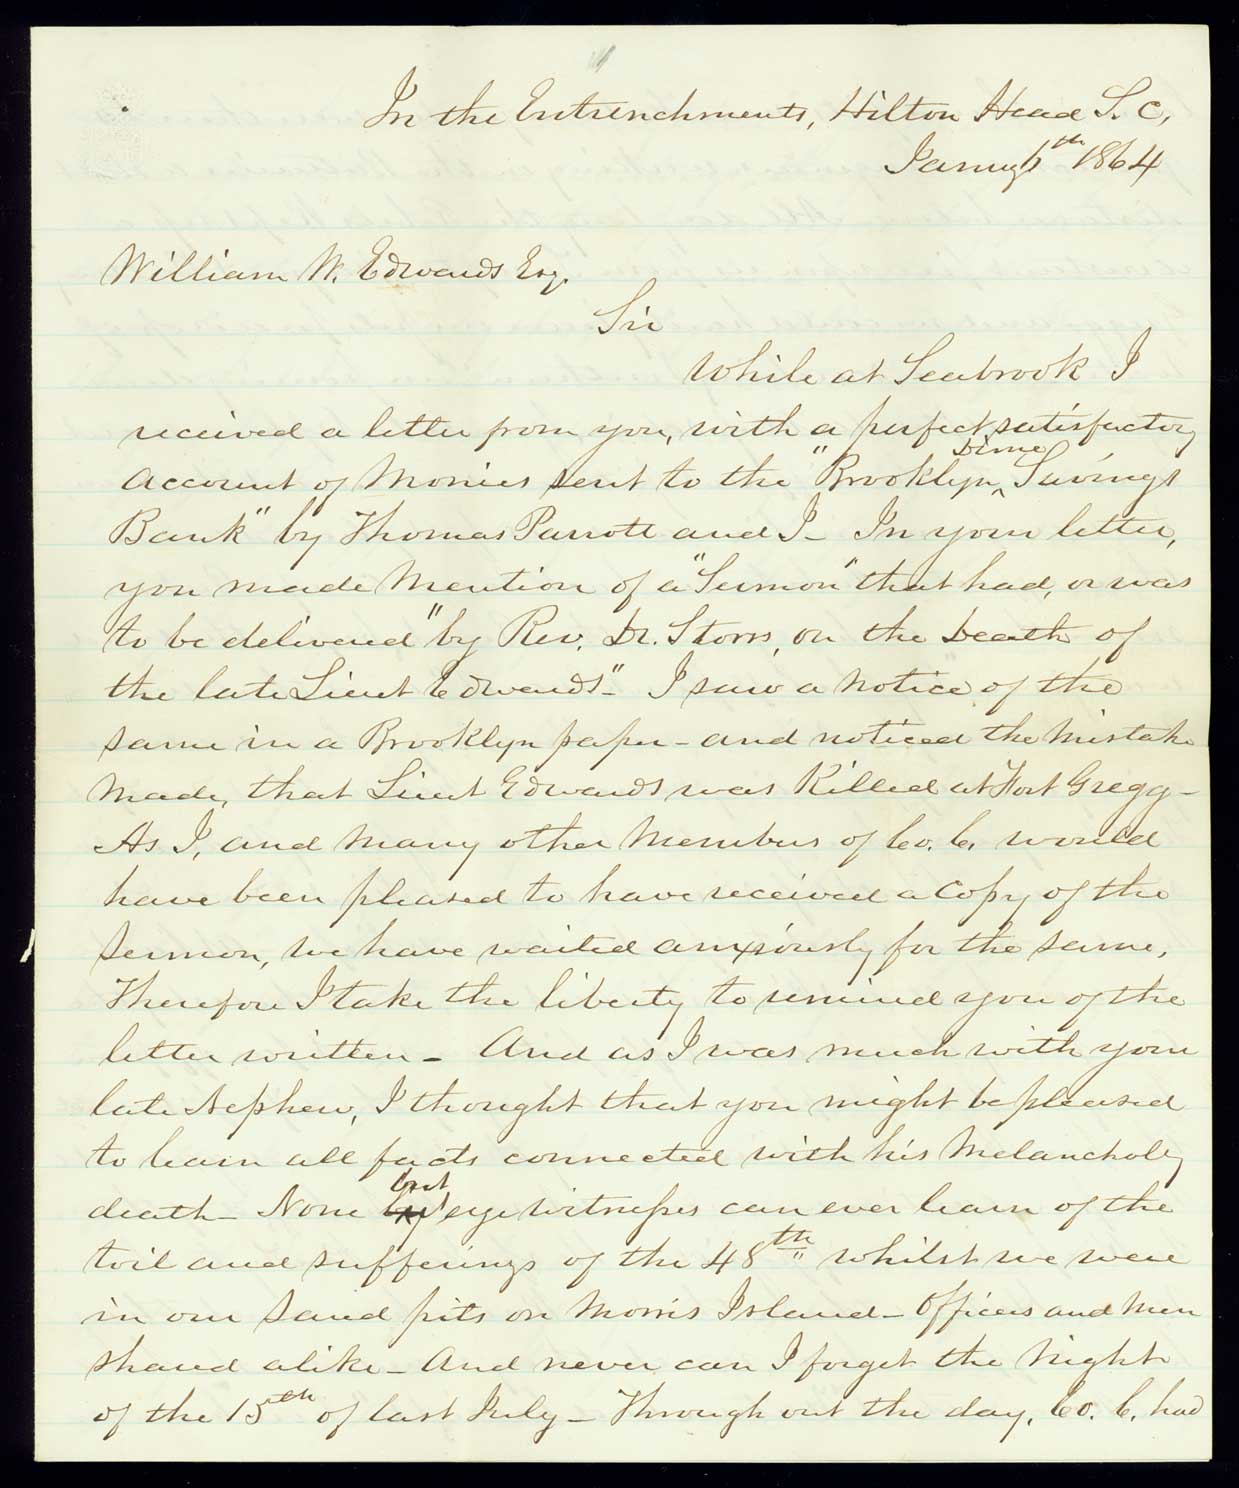 Letter, Dayton Britton, Hilton Head, South Carolina, to William W. Edwards